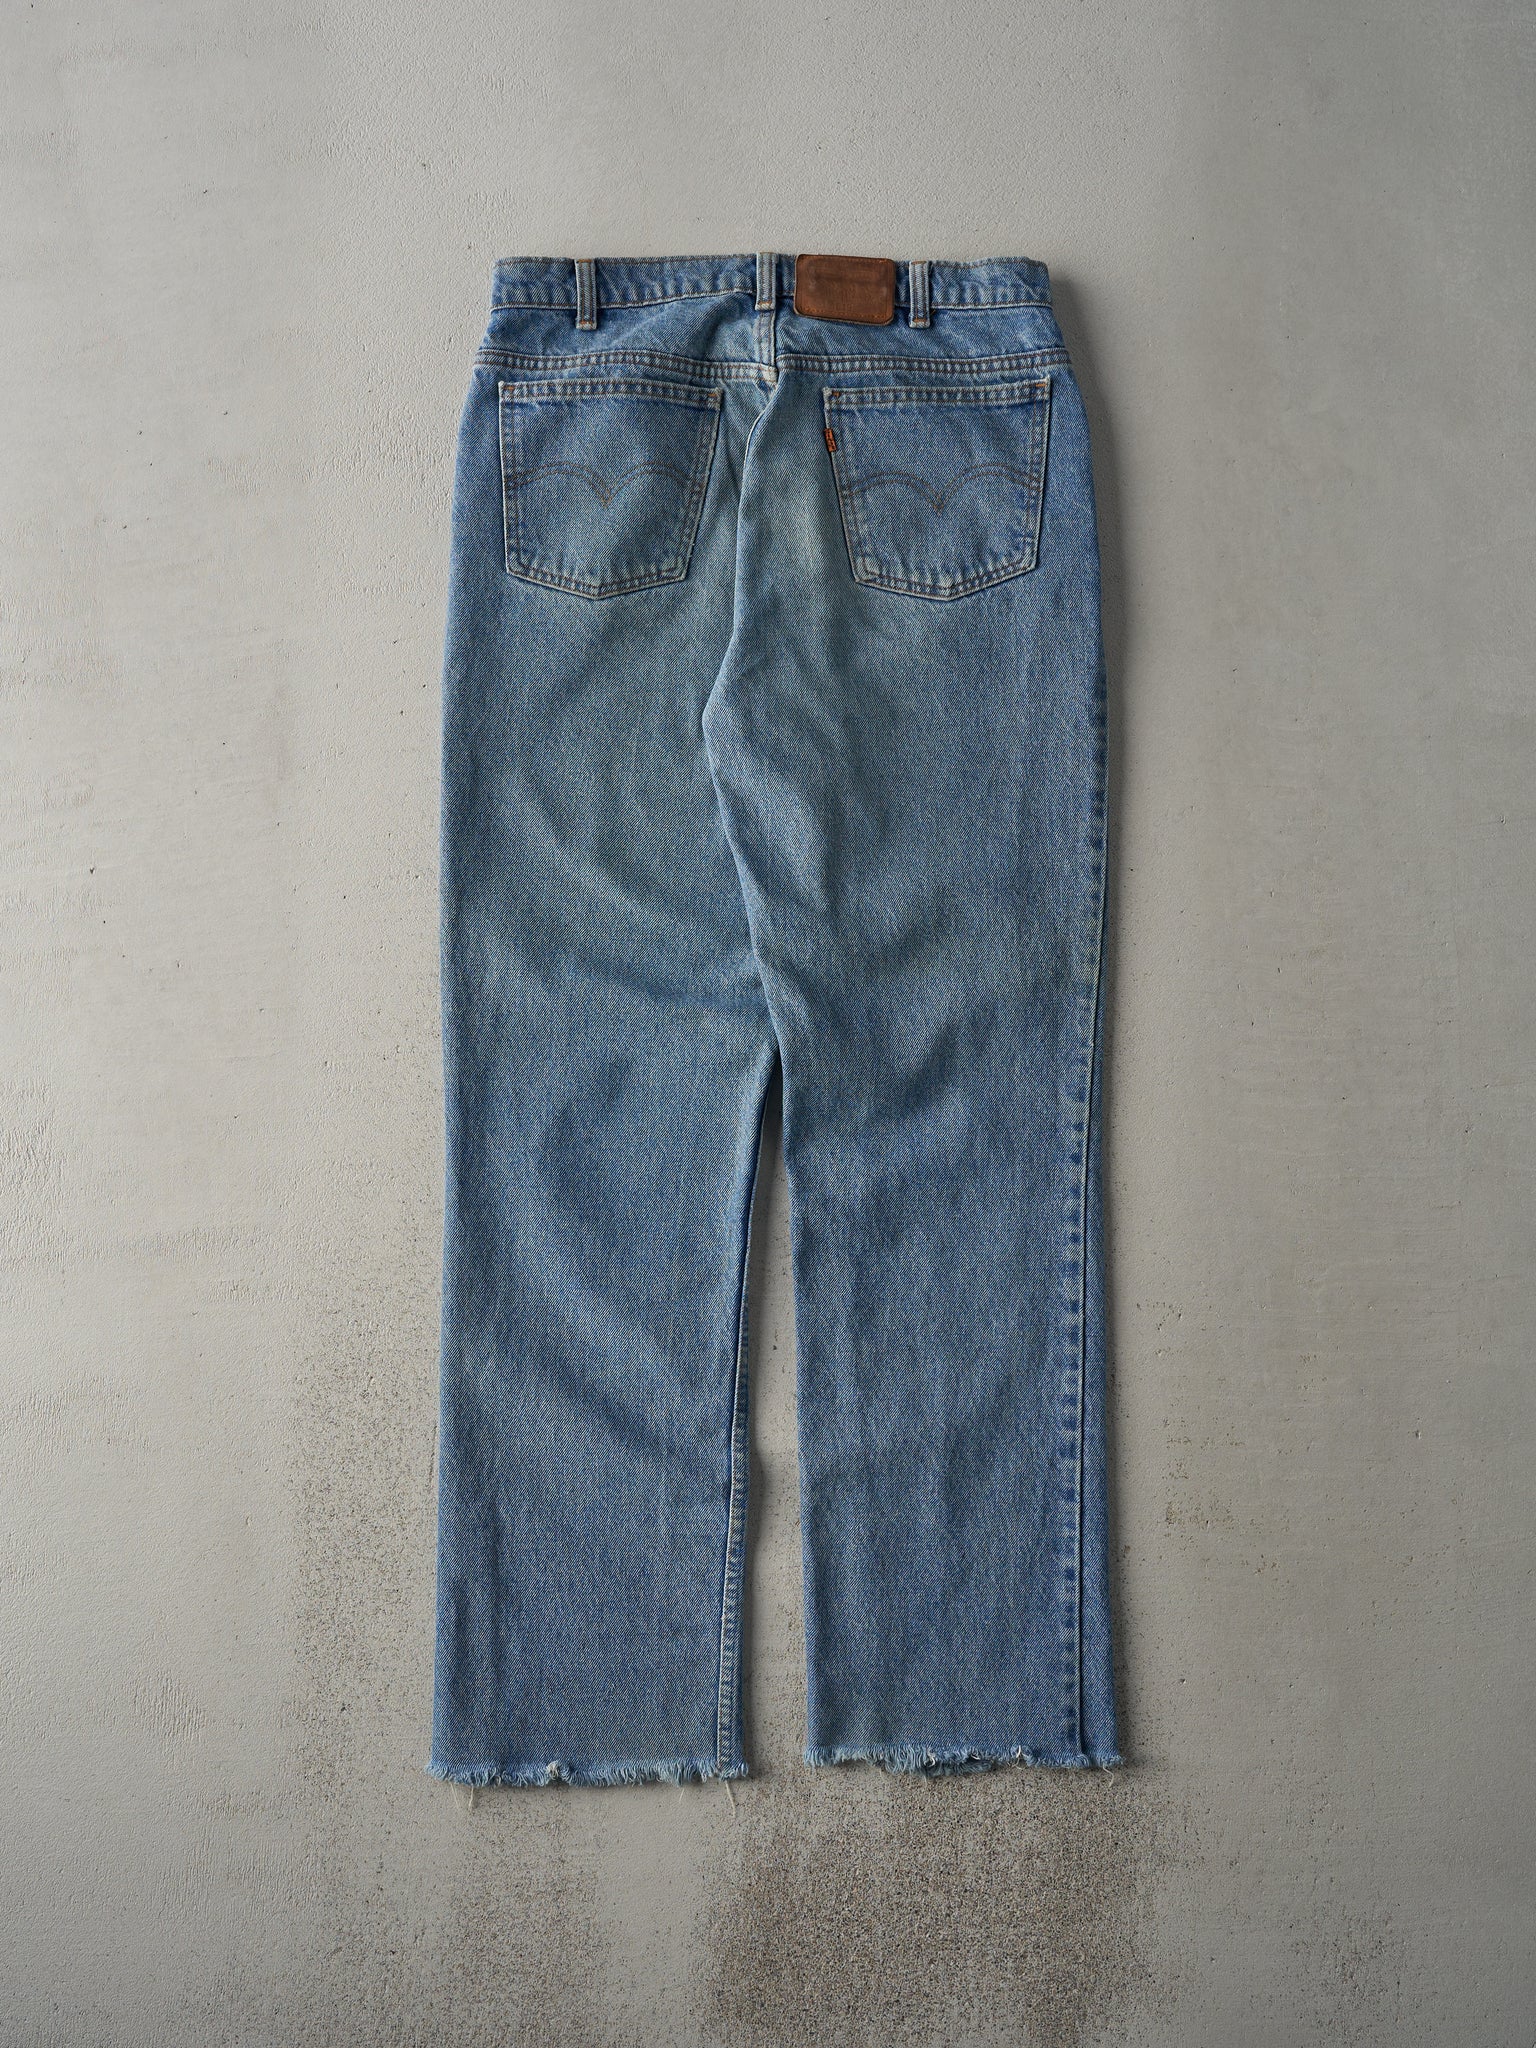 Vintage 70s Light Wash Levi's 619 Orange Tab Jeans (32x30.5)